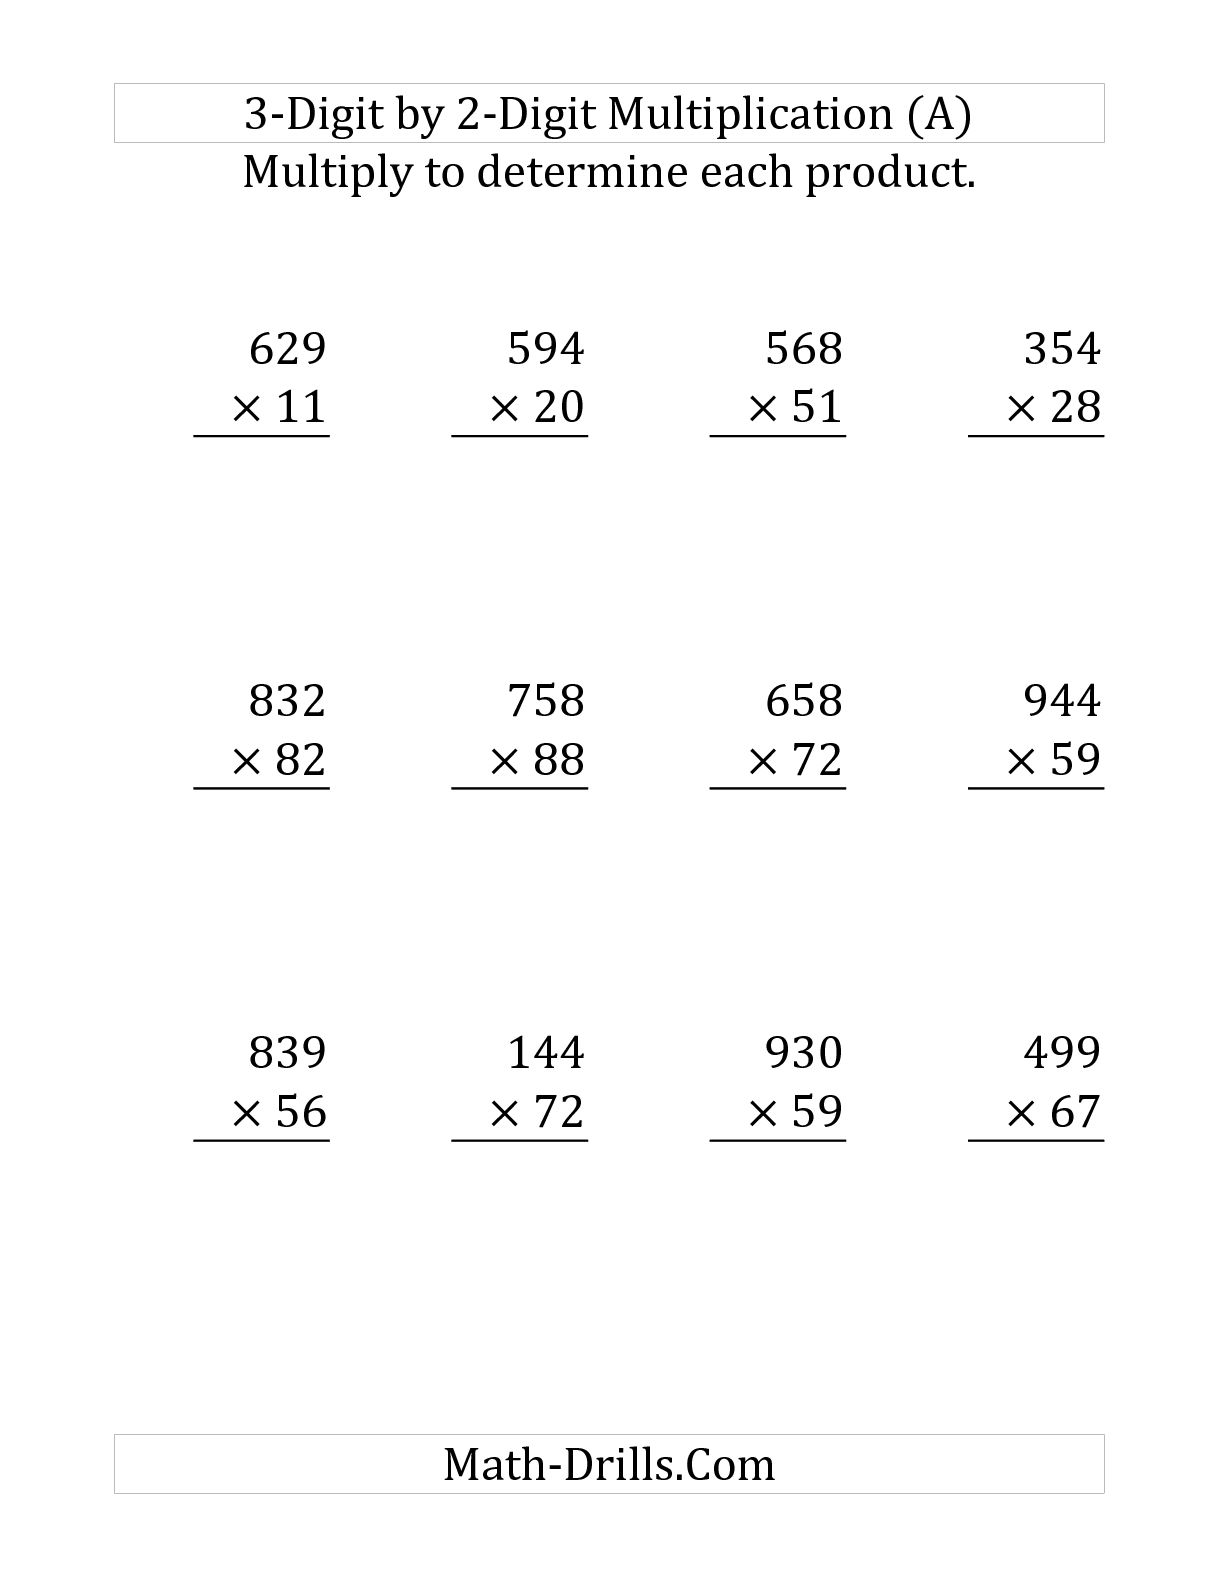 Adding 3 Numbers To Make 10 Worksheet